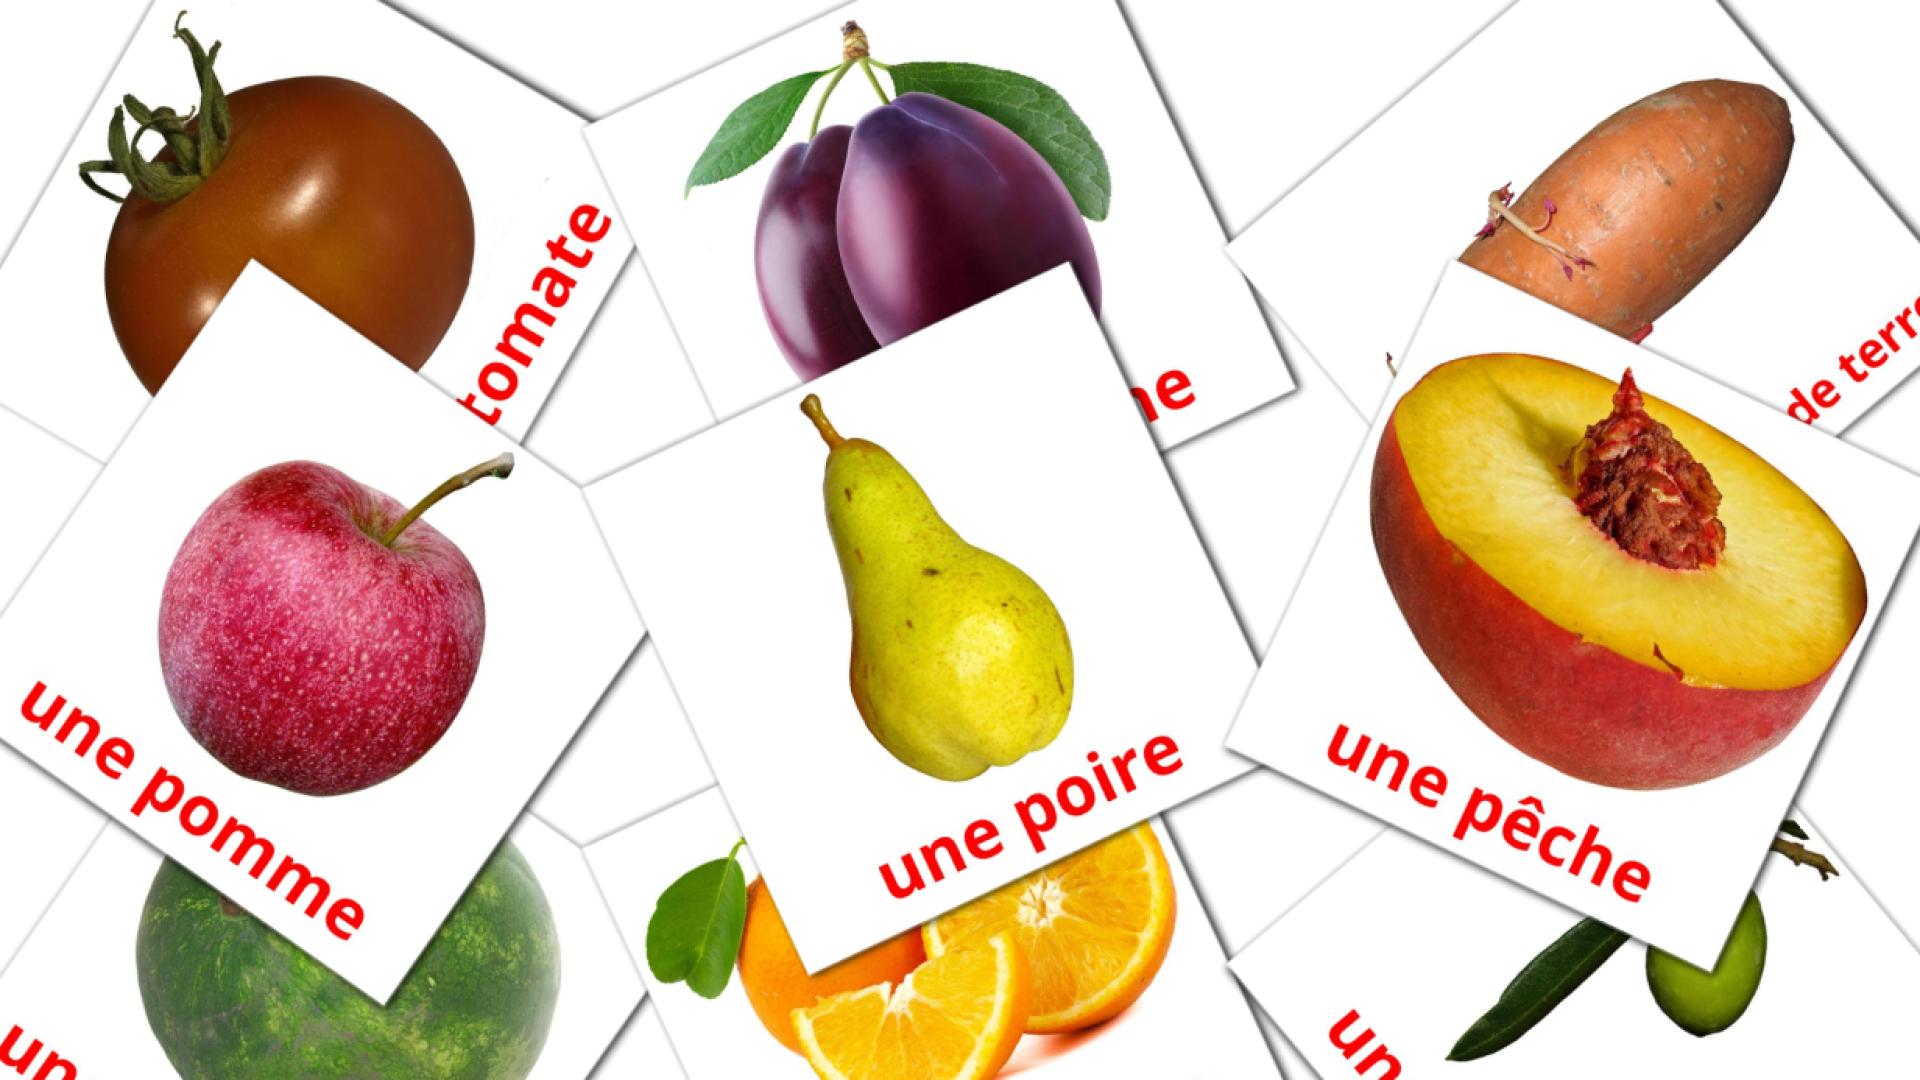 Nourriture french vocabulary flashcards